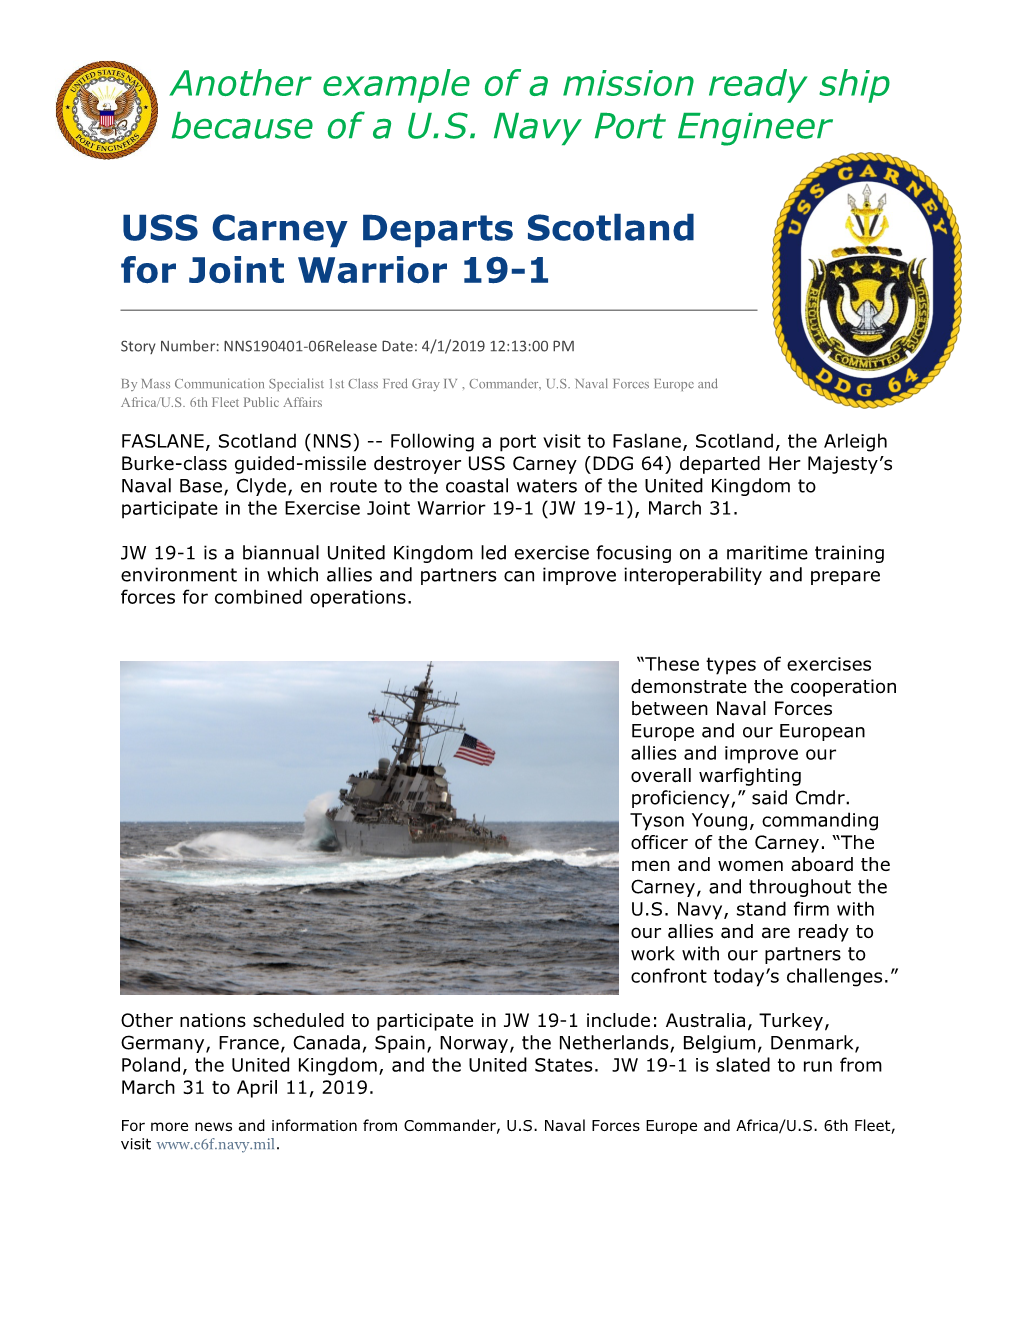 USS Carney (DDG